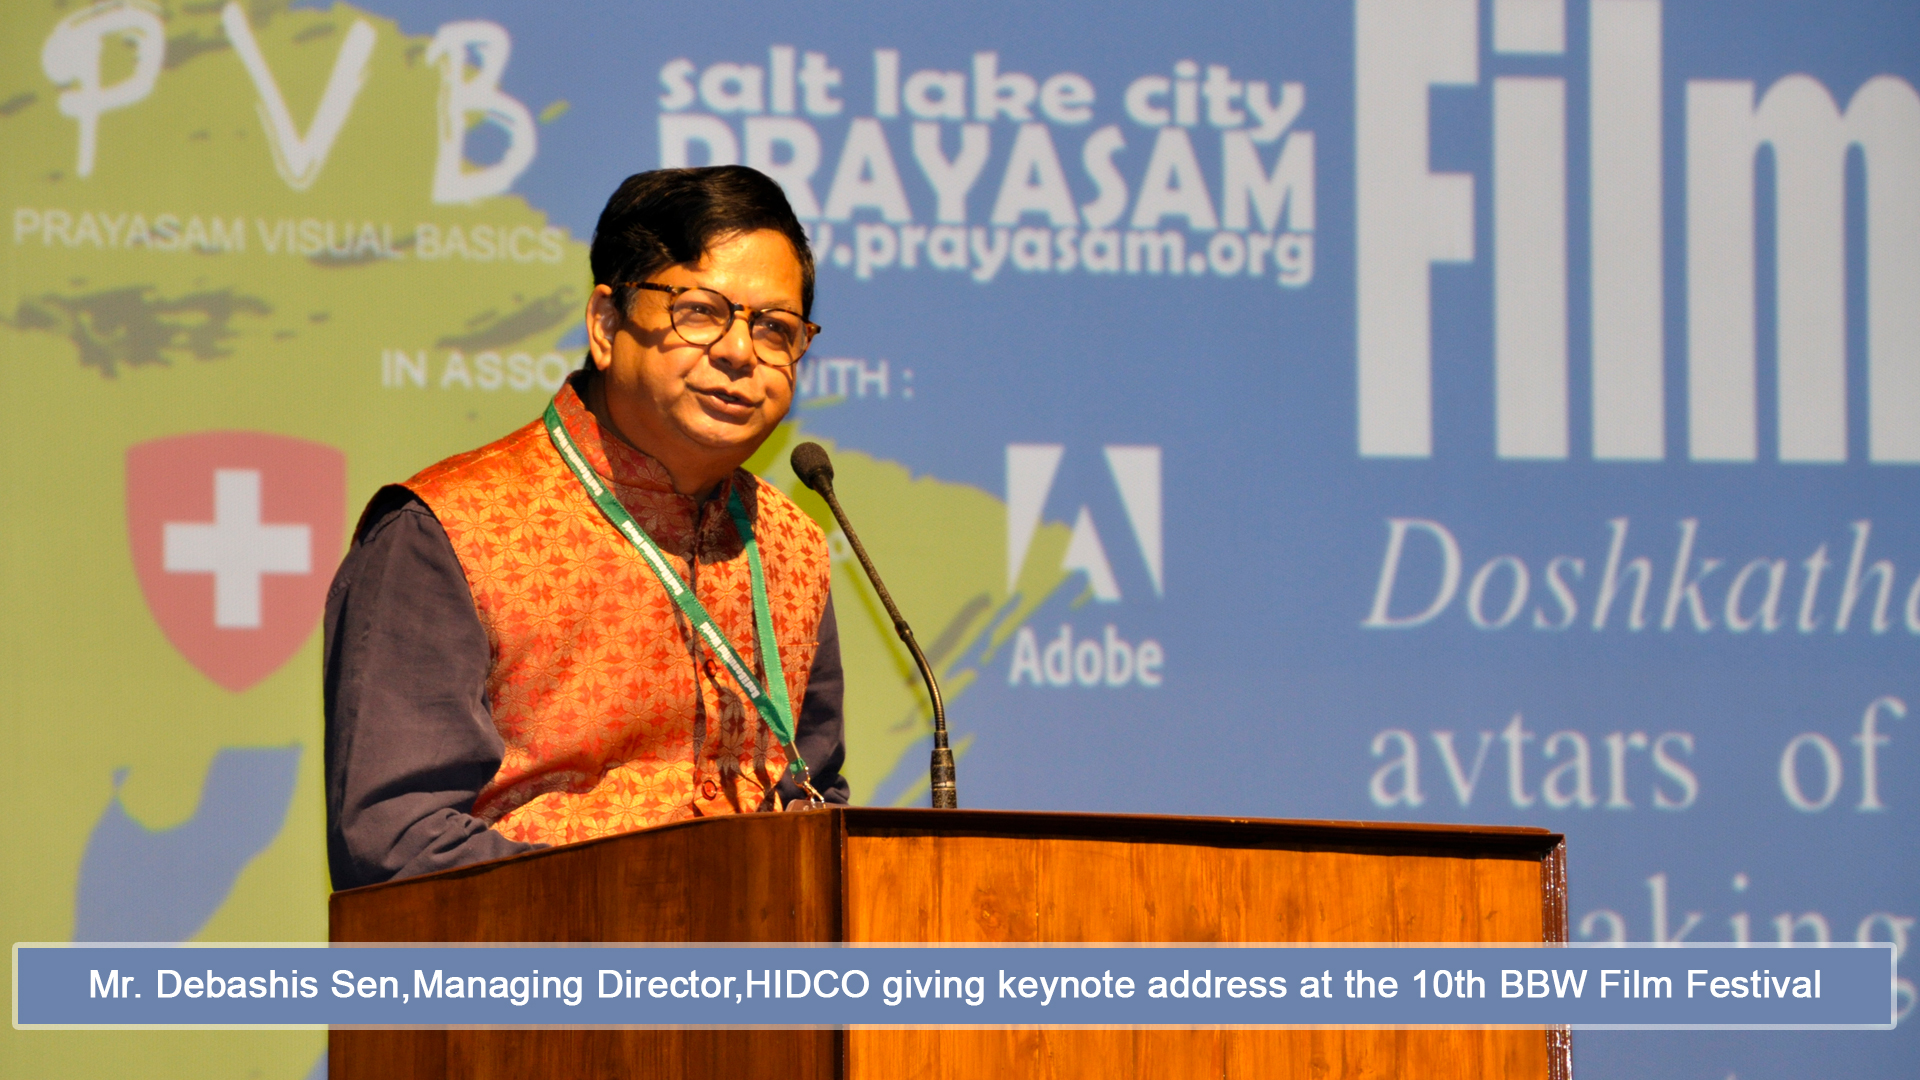 Mr. Debashis Sen,Managing Director,HIDCO giving keynote address at the 10th BBW Film Festival